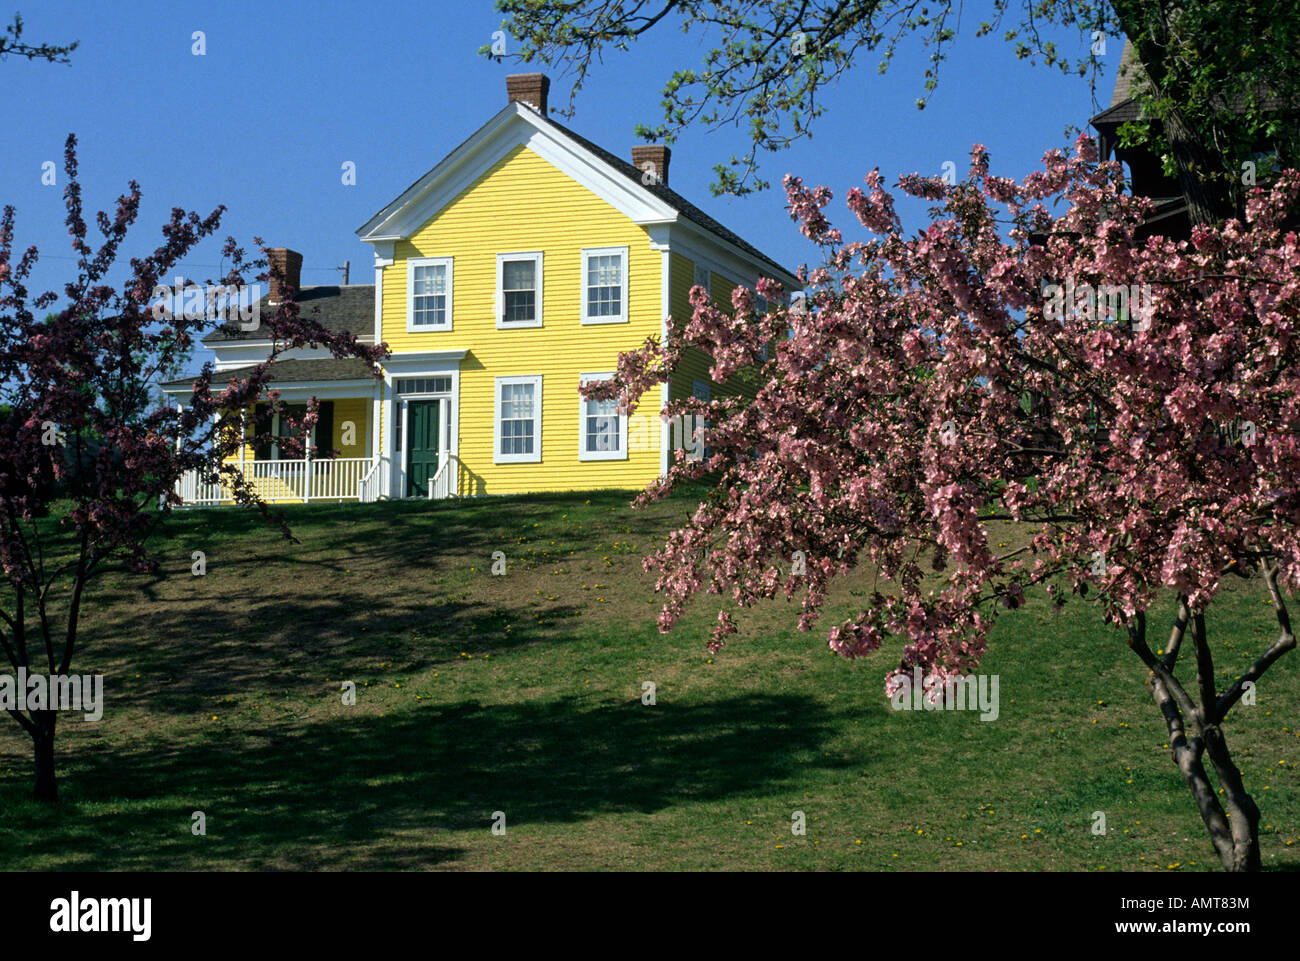 HISTORIC HOME IN THE IRVINE PARK NEIGHBORHOOD OF ST. PAUL, MINNESOTA. SPRINGTIME FLOWERING TREES. Stock Photo